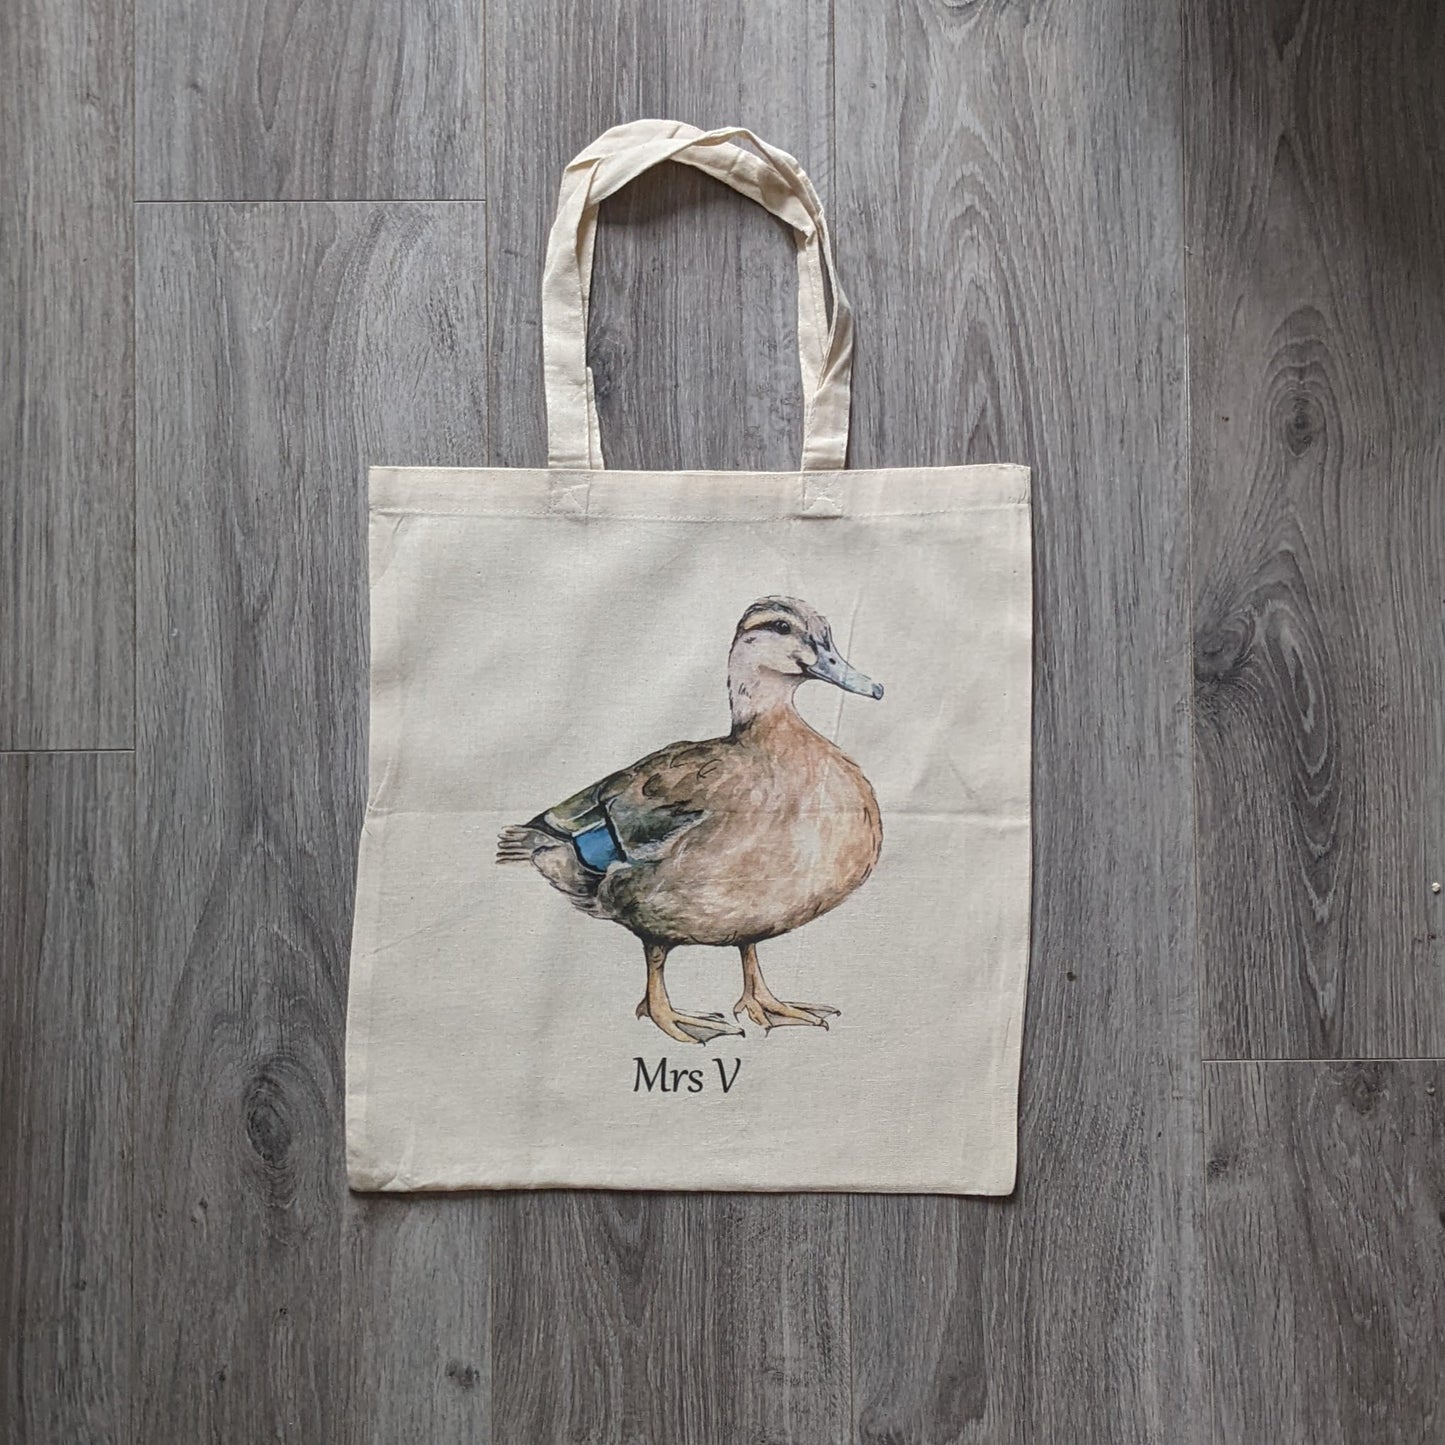 "Queenie" Female Mallard Duck Tote Bag